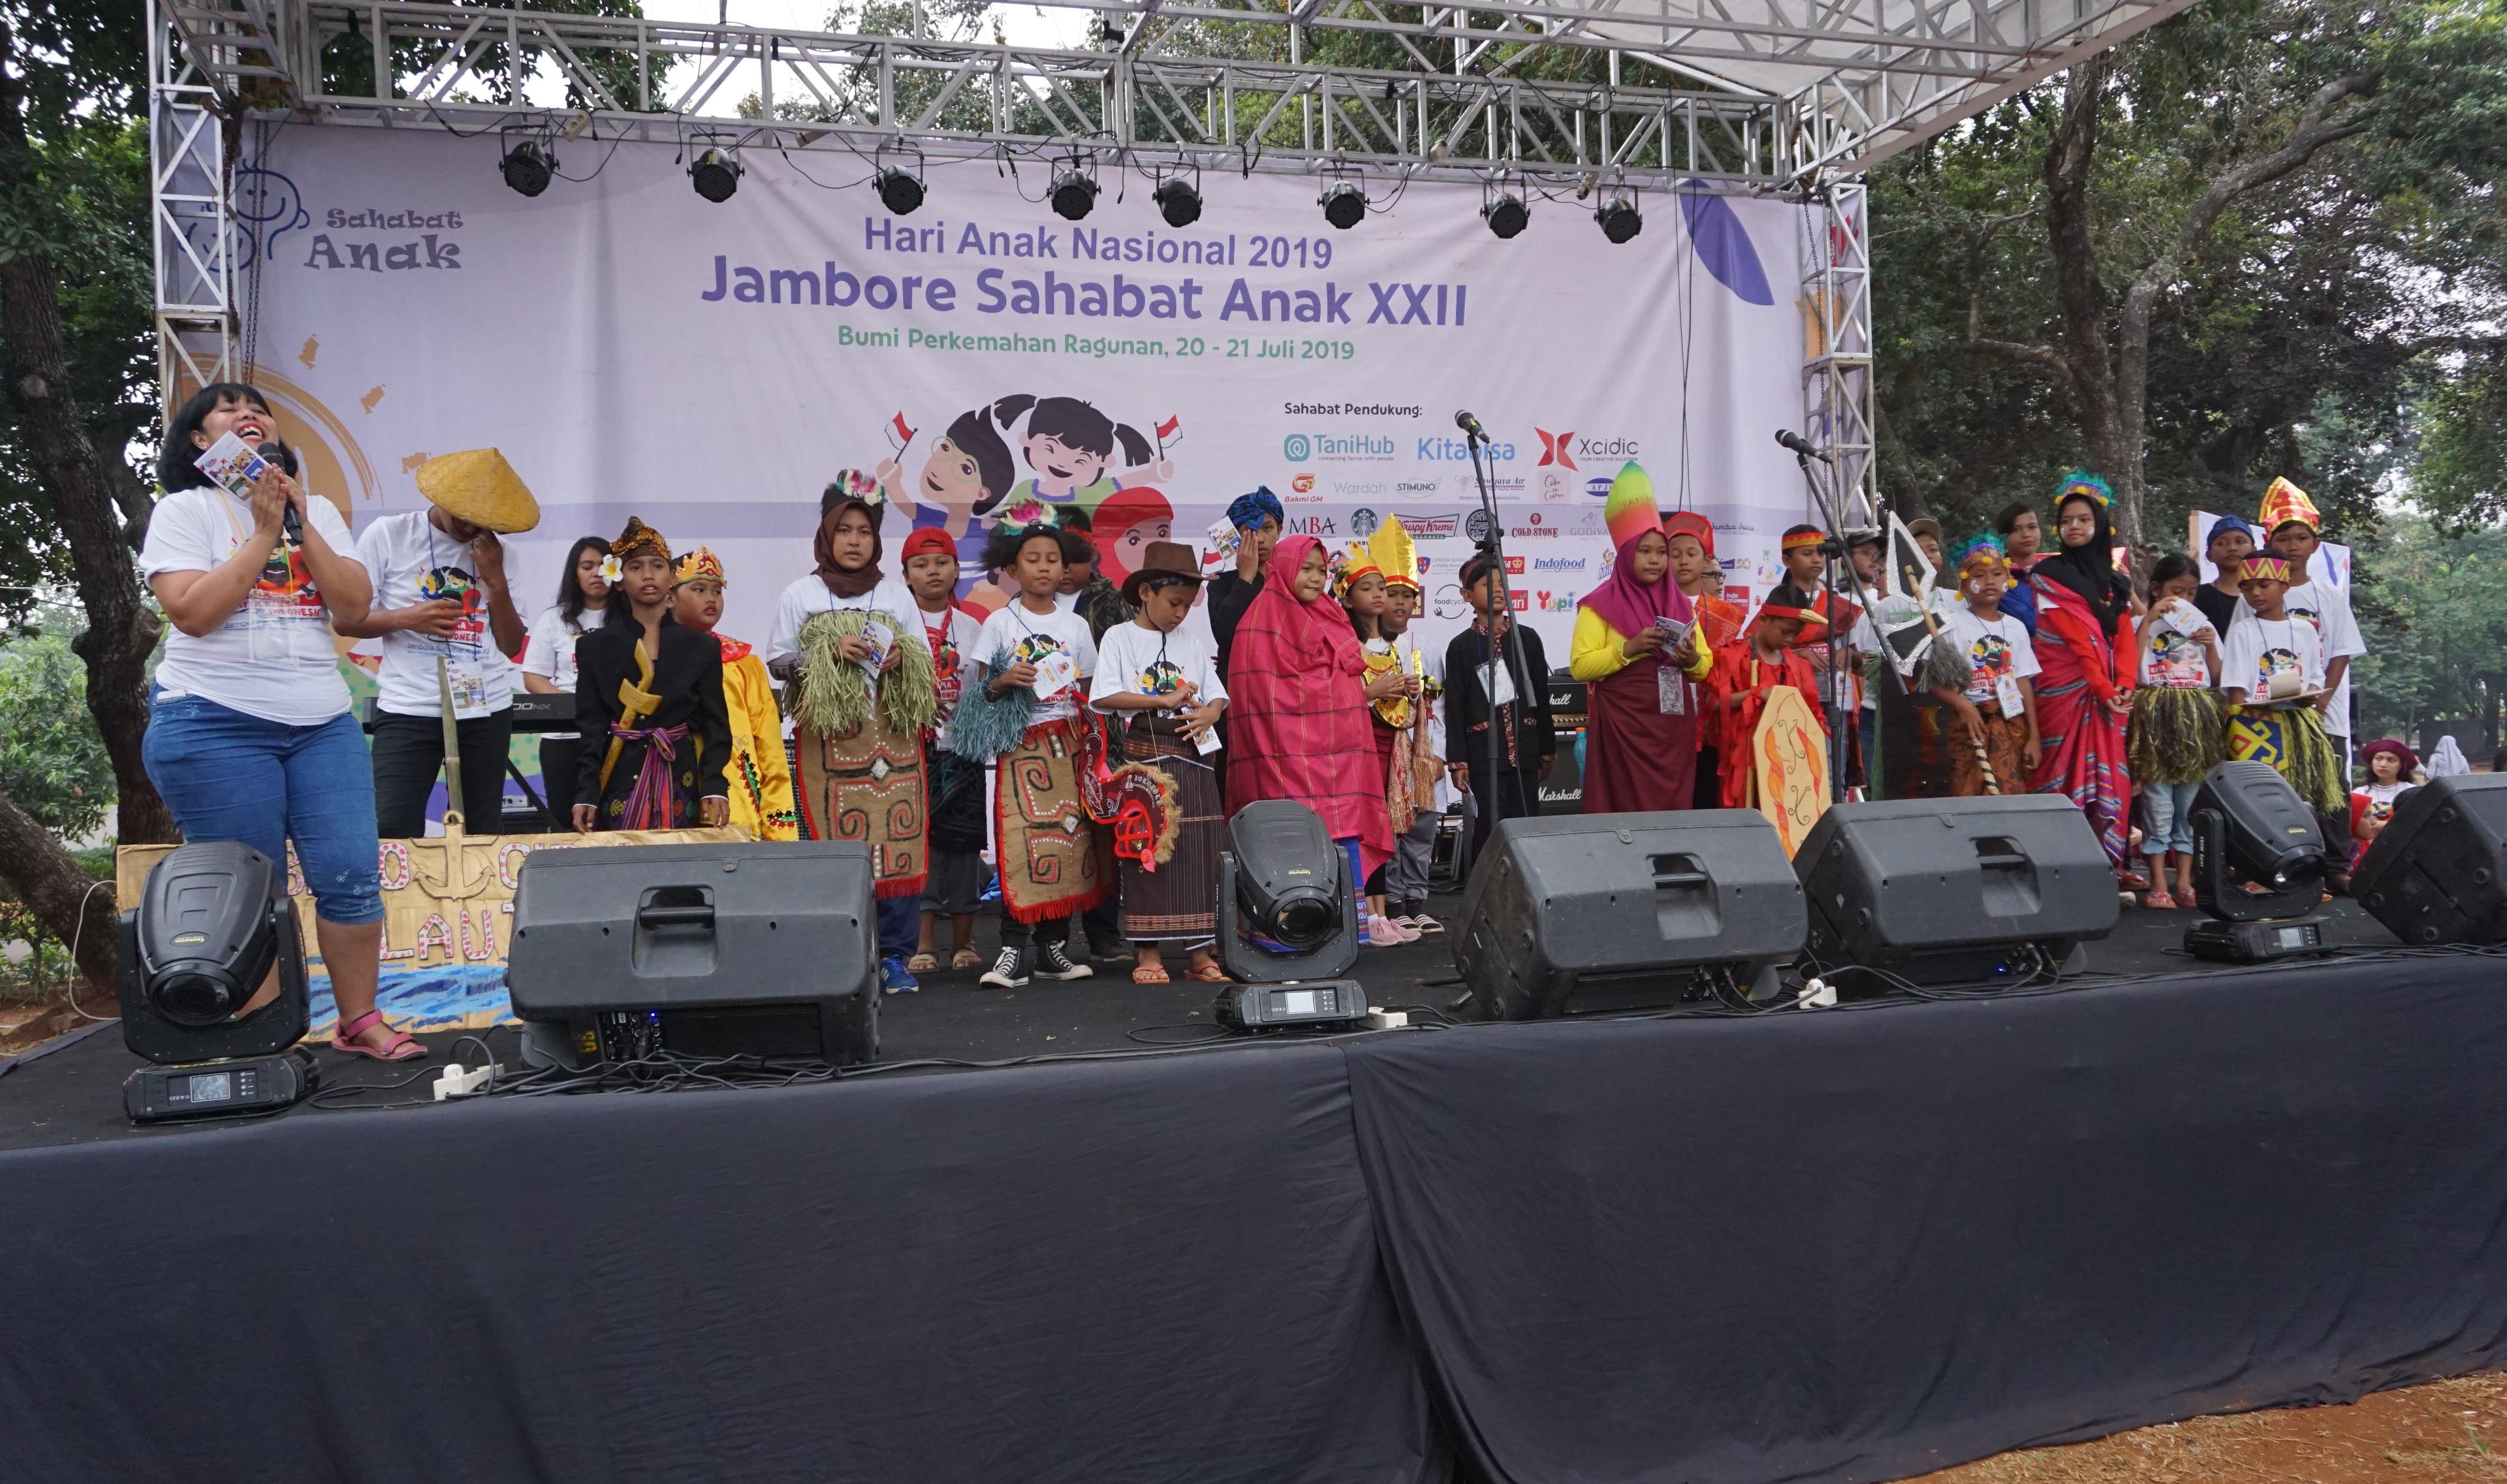 [Advertorial] Jambore Sahabat Anak, Serukan Kesetaraan dan Keberagaman Indonesia 